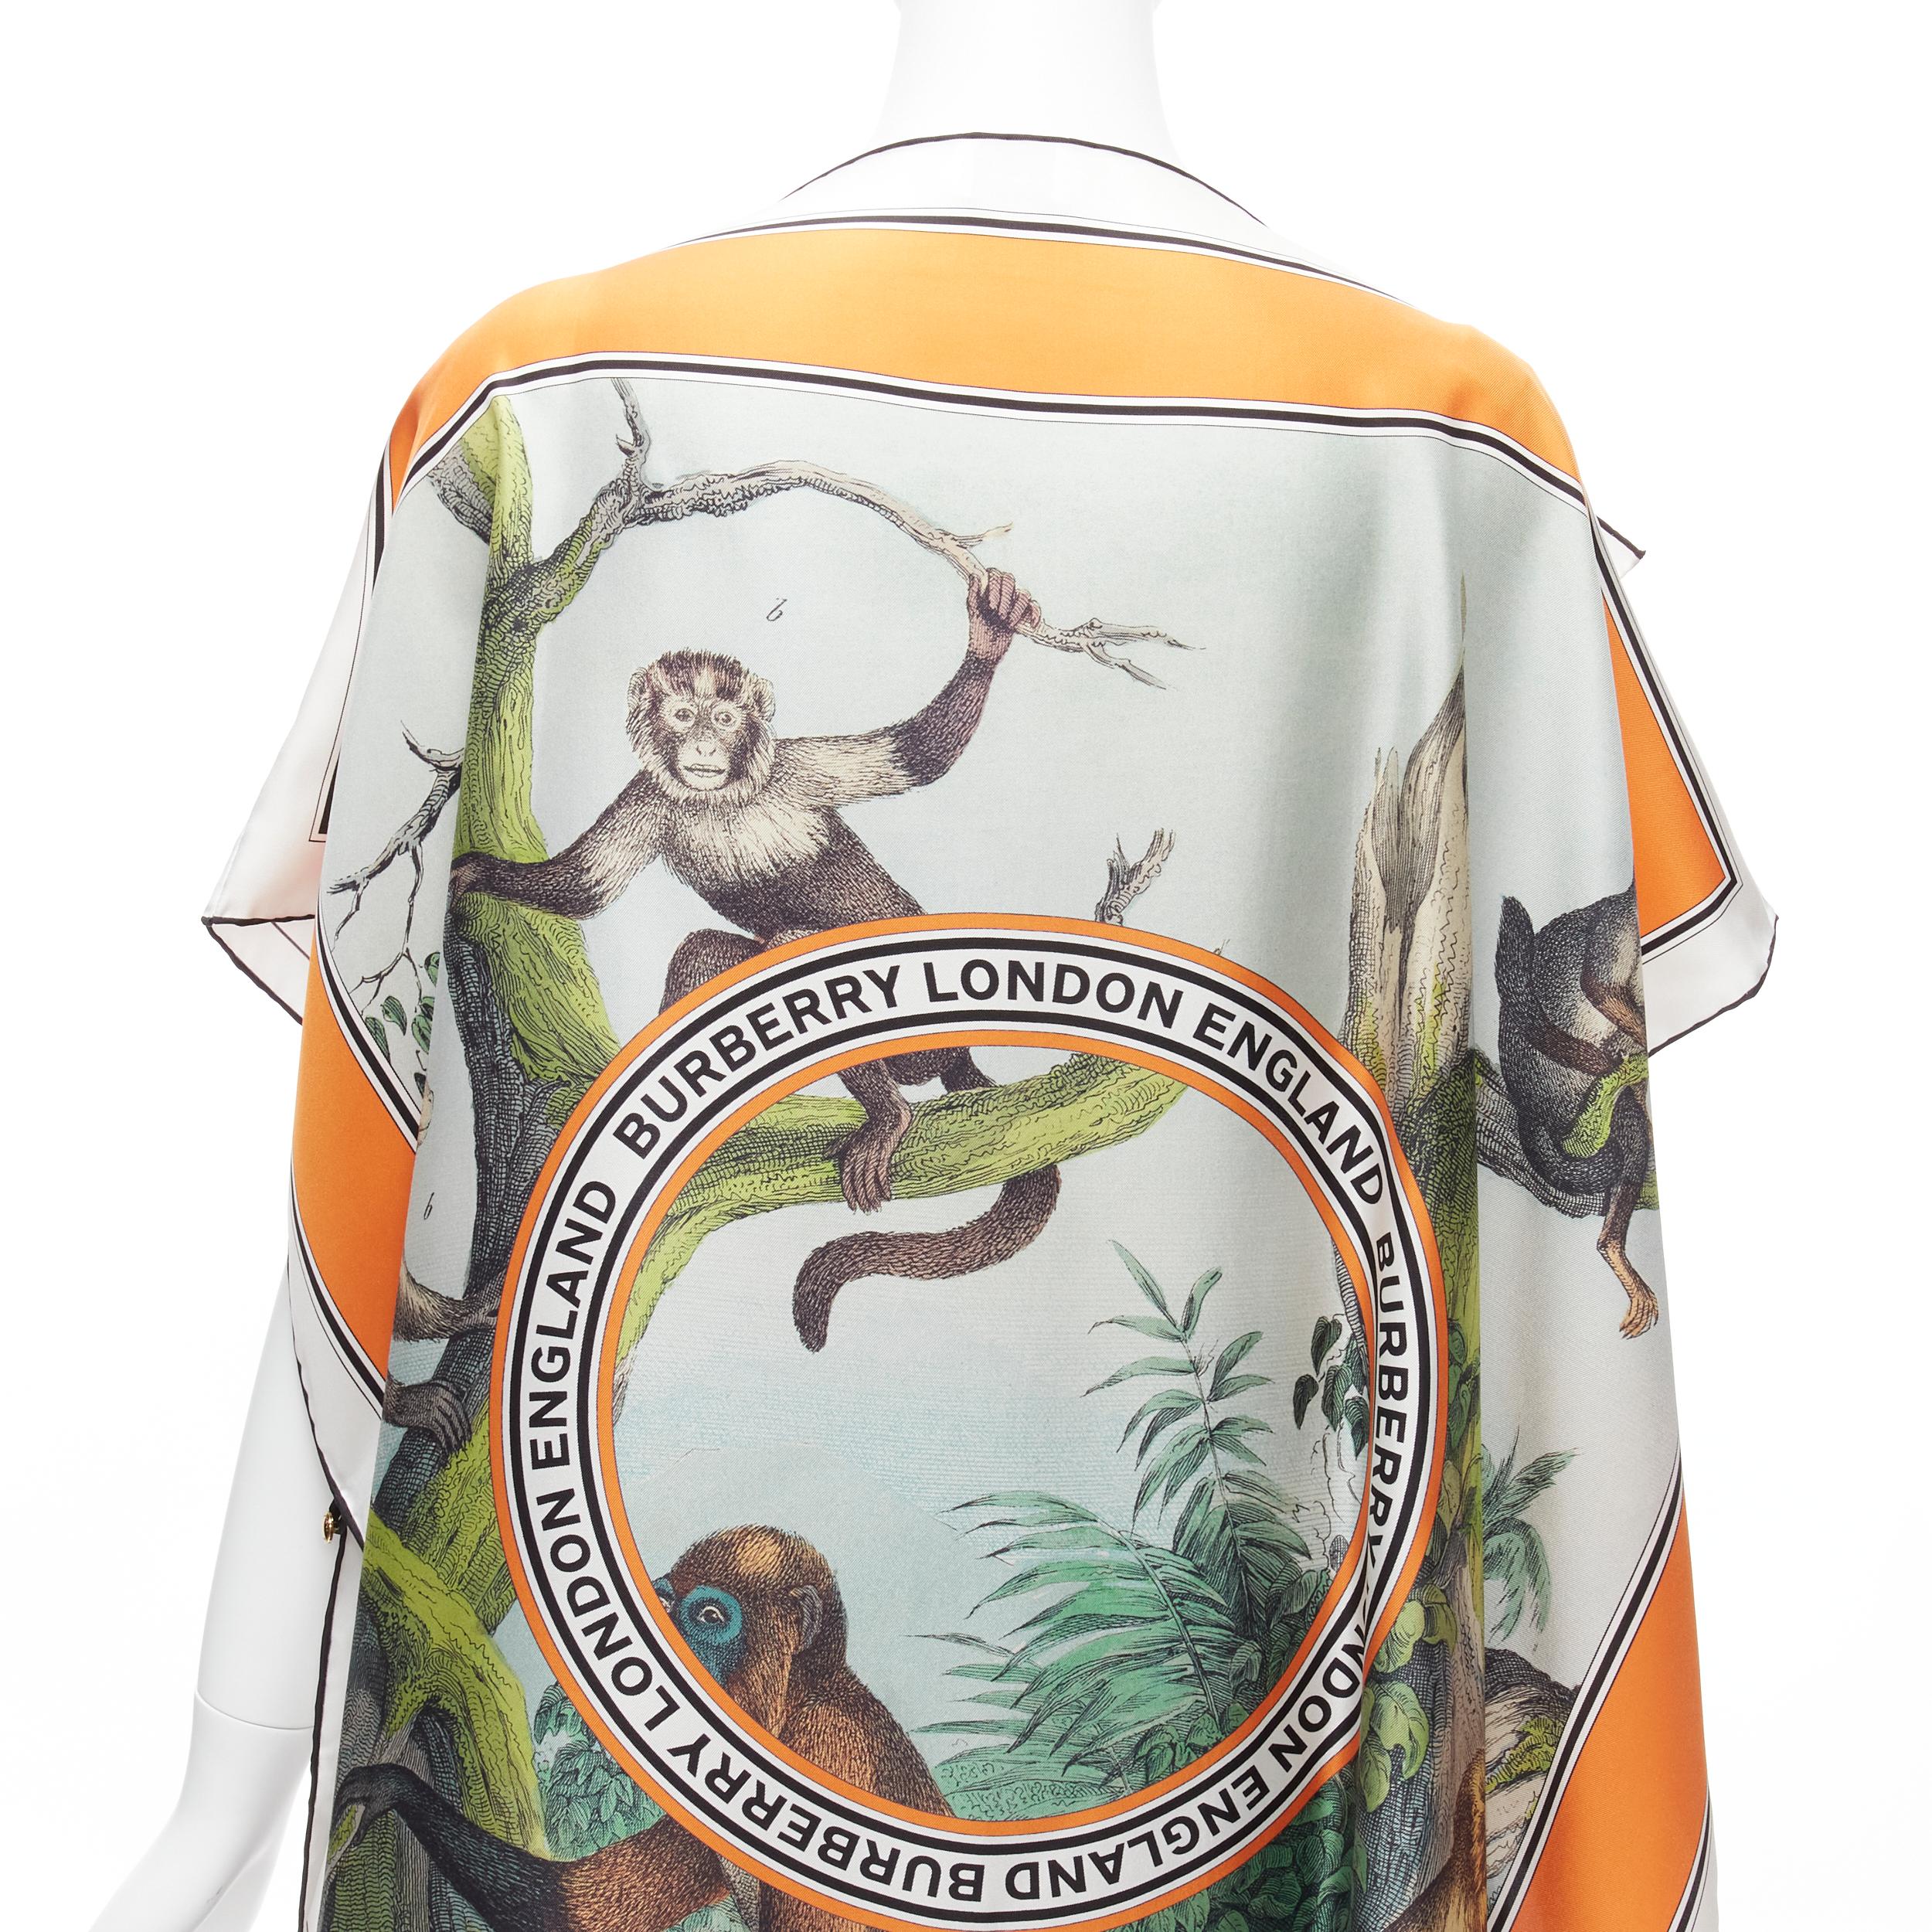 BURBERRY LONDON Tisci 100% silk orange monkey print draped scarf vest top 2